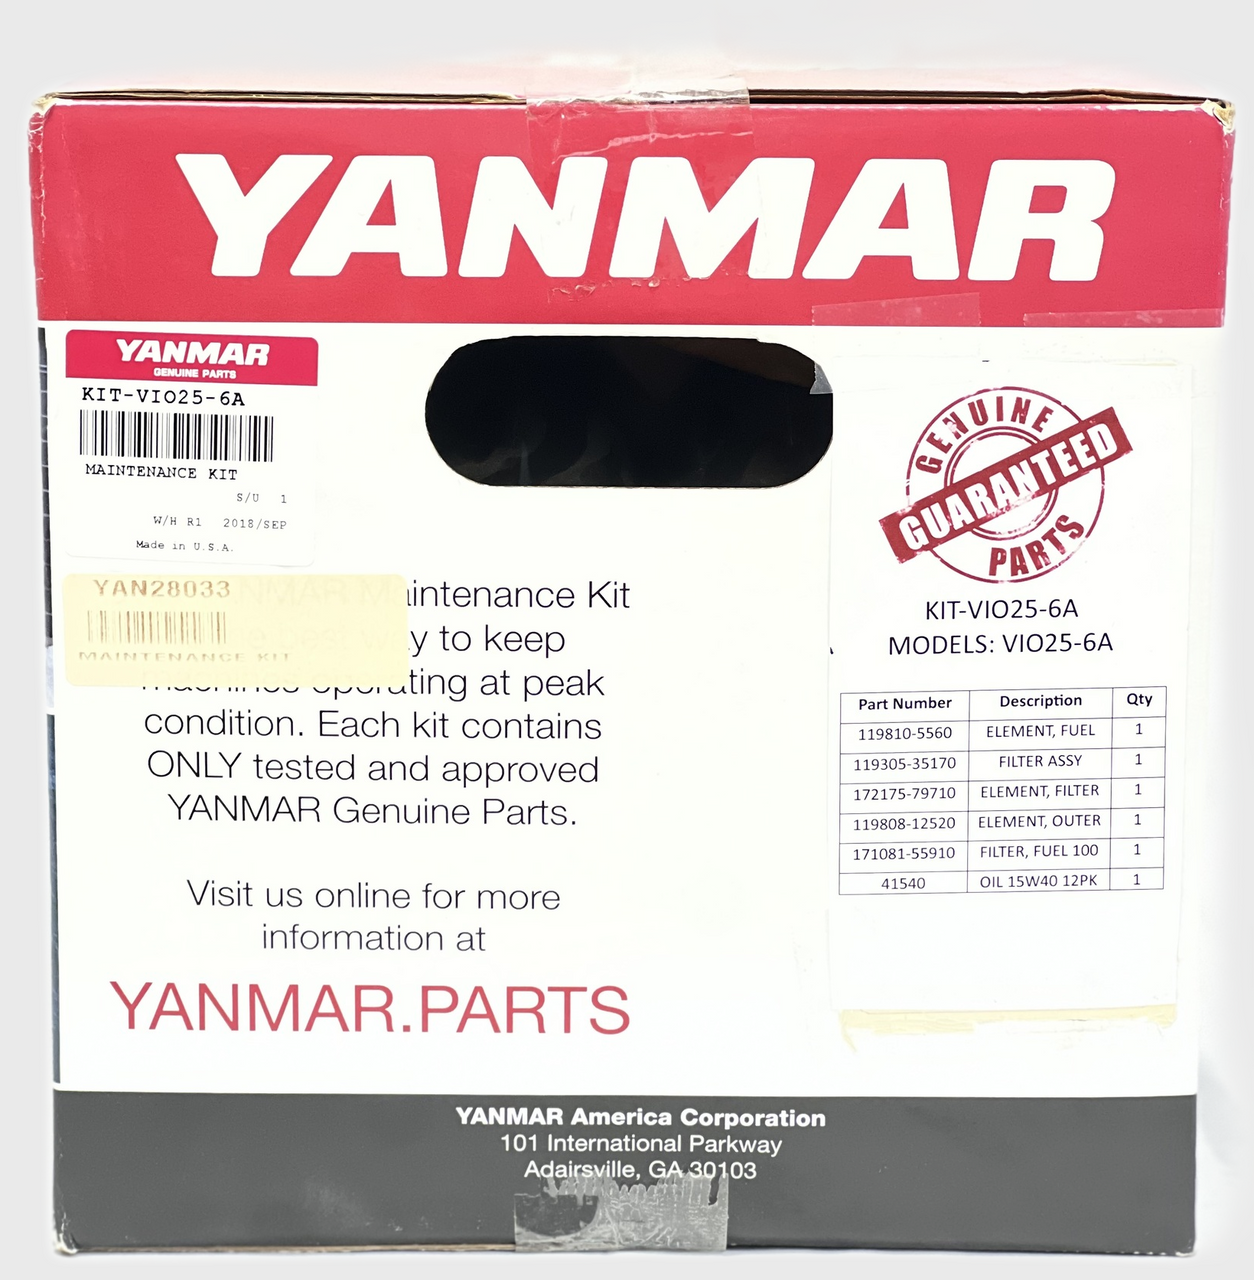 Yanmar Maintenance Kit KIT-VIO25-6A